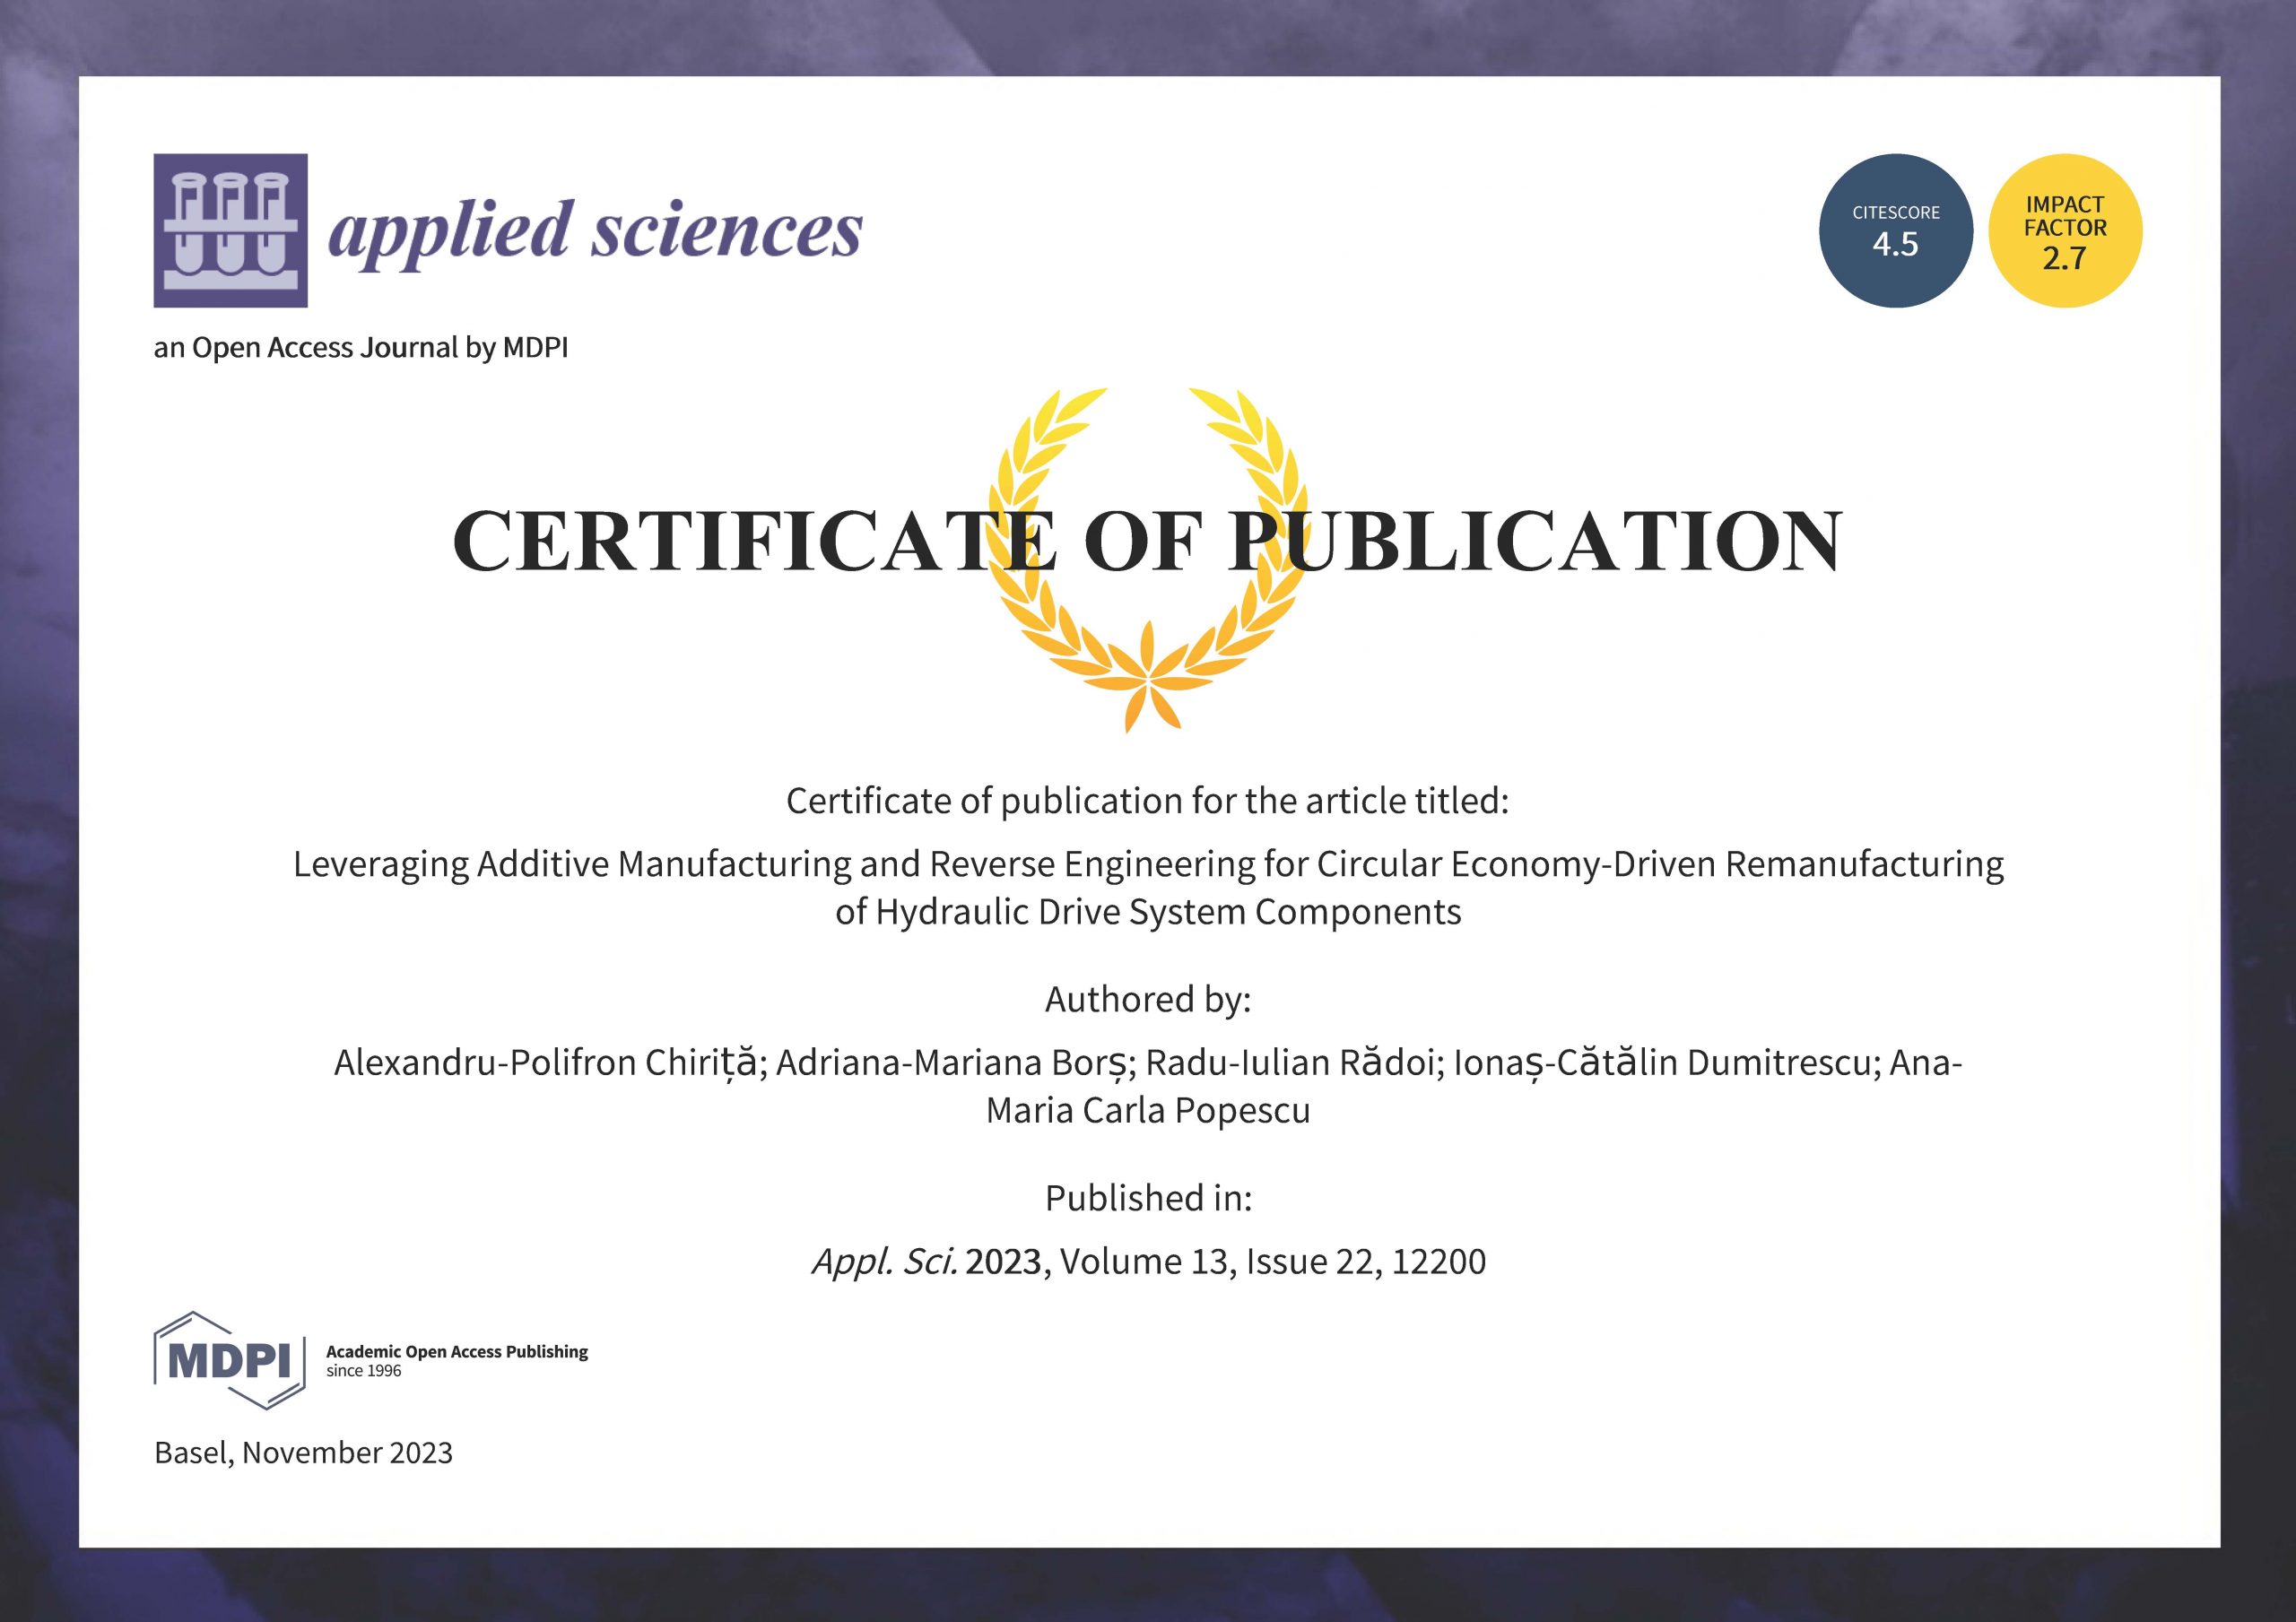 Publication Certificate MDPI_Applied Sciences